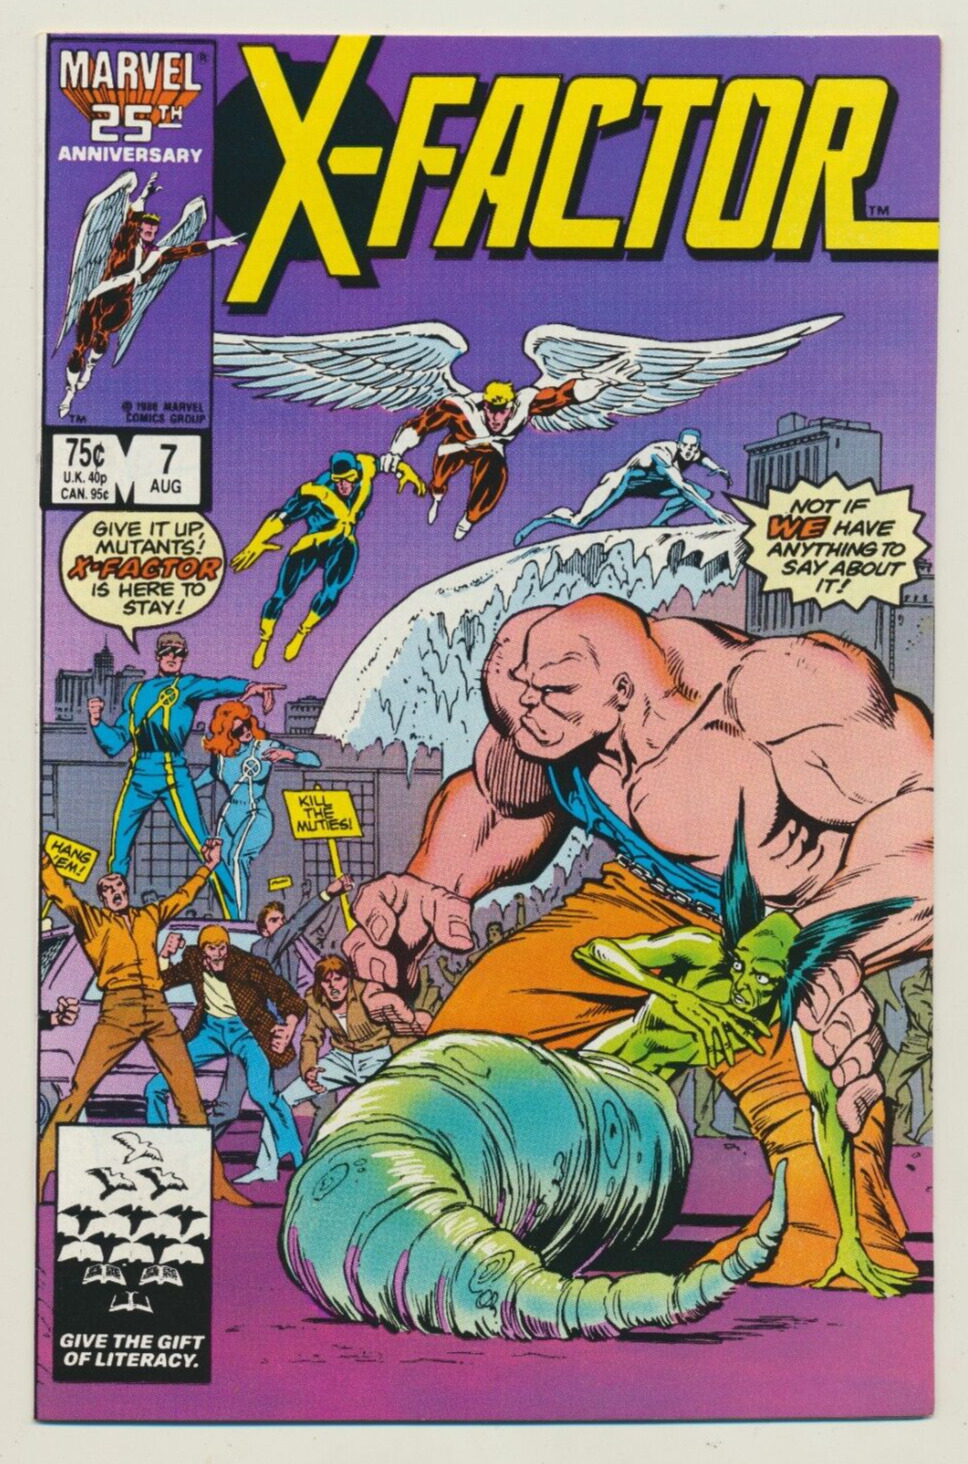 X-Factor #7 Marvel Comics Aug. 1986 VF 8.0 X-Men Cyclops Jean Grey Iceman Beast